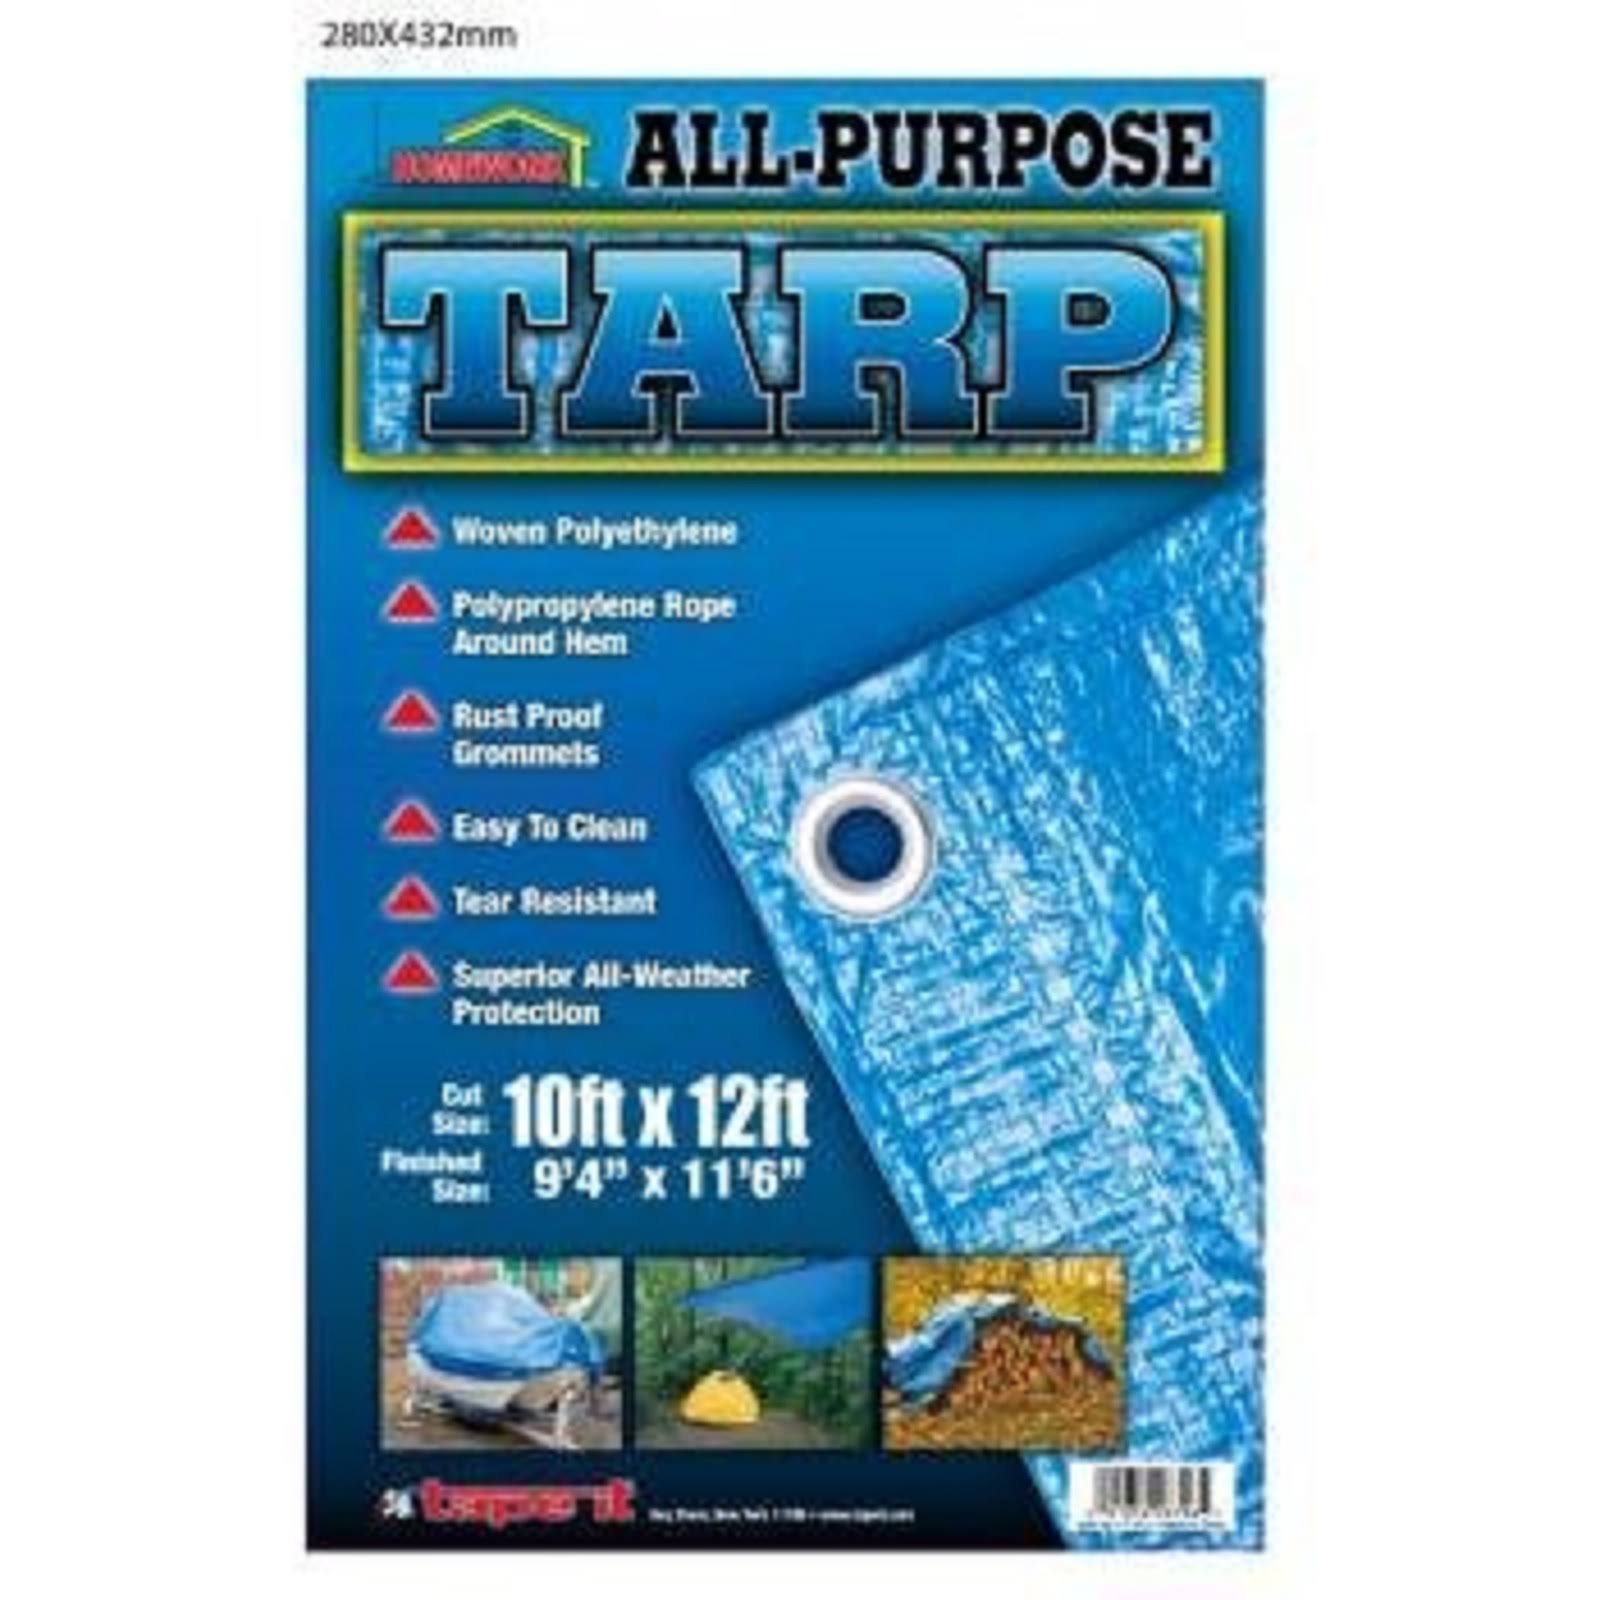 All-Purpose Polyethelene Tarp - Blue, 10'x12'